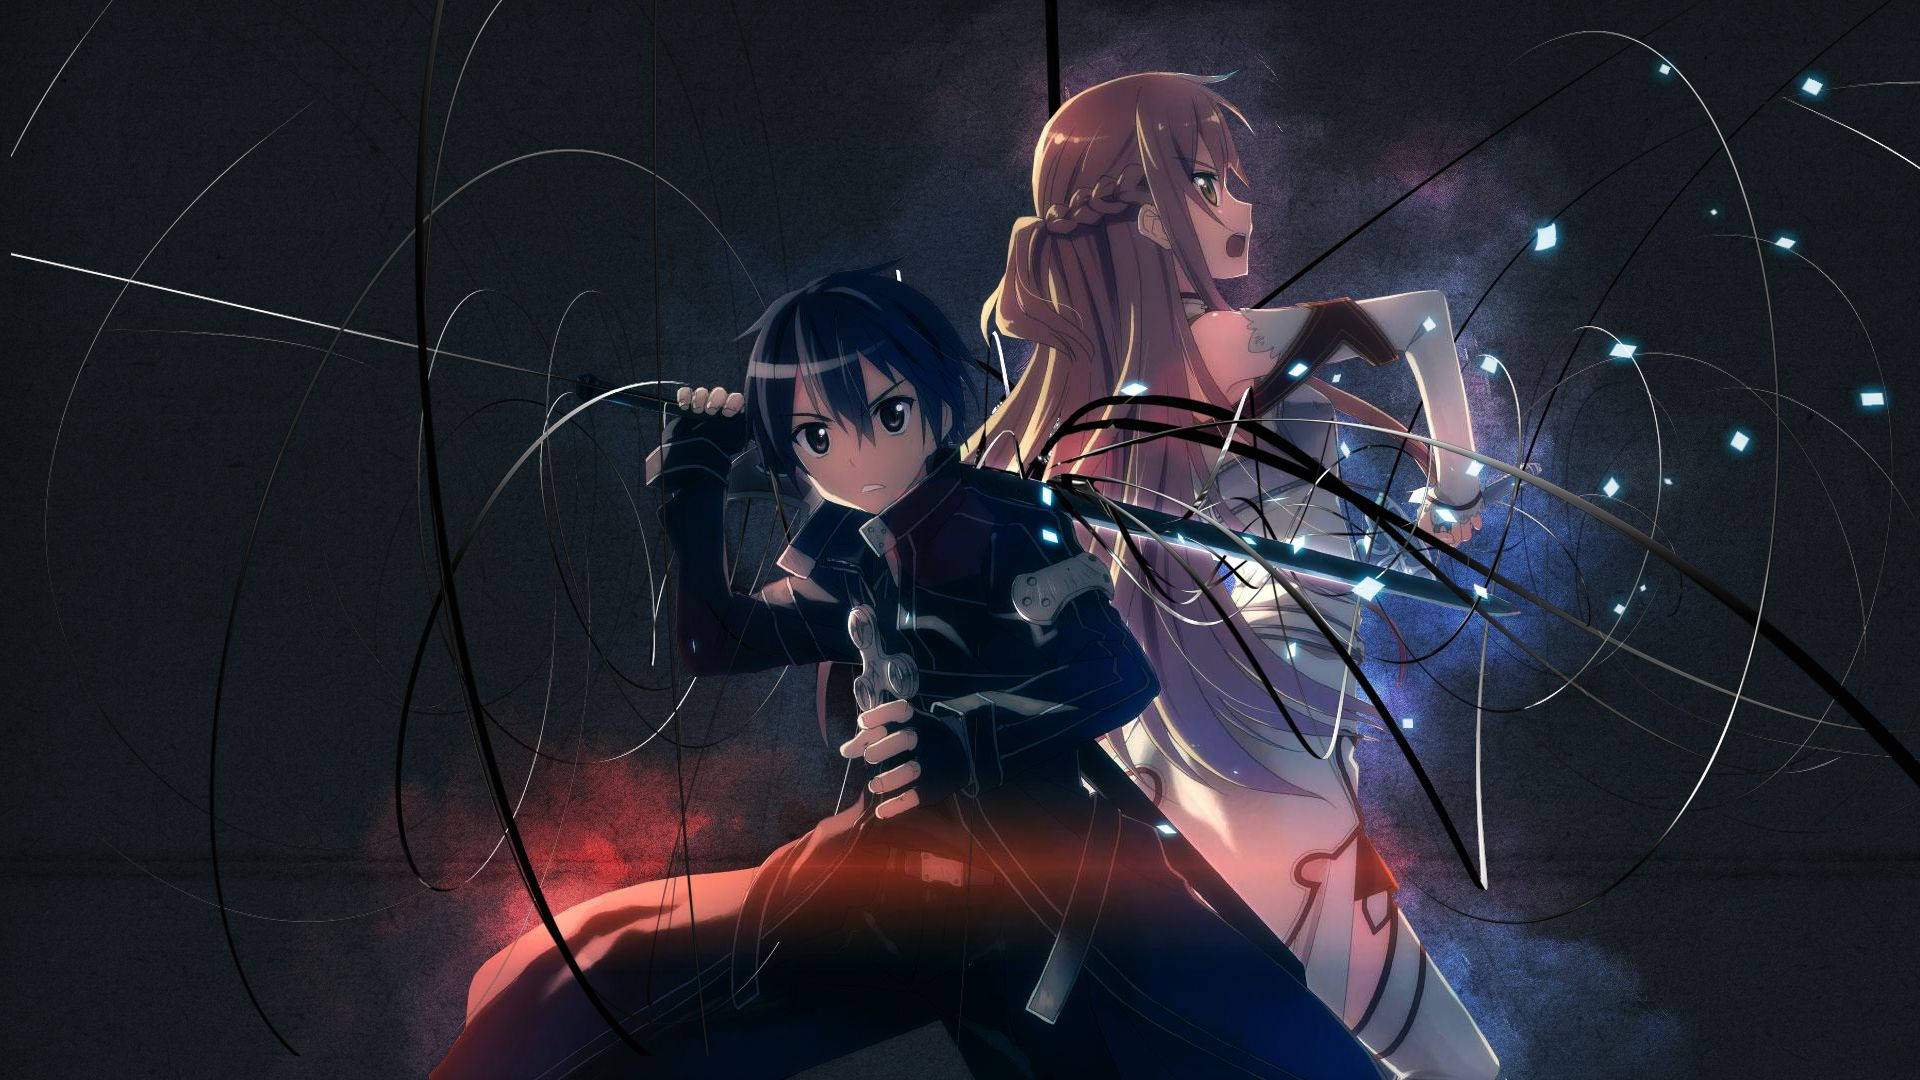 Kirito Fighting Alongside Asuna Background